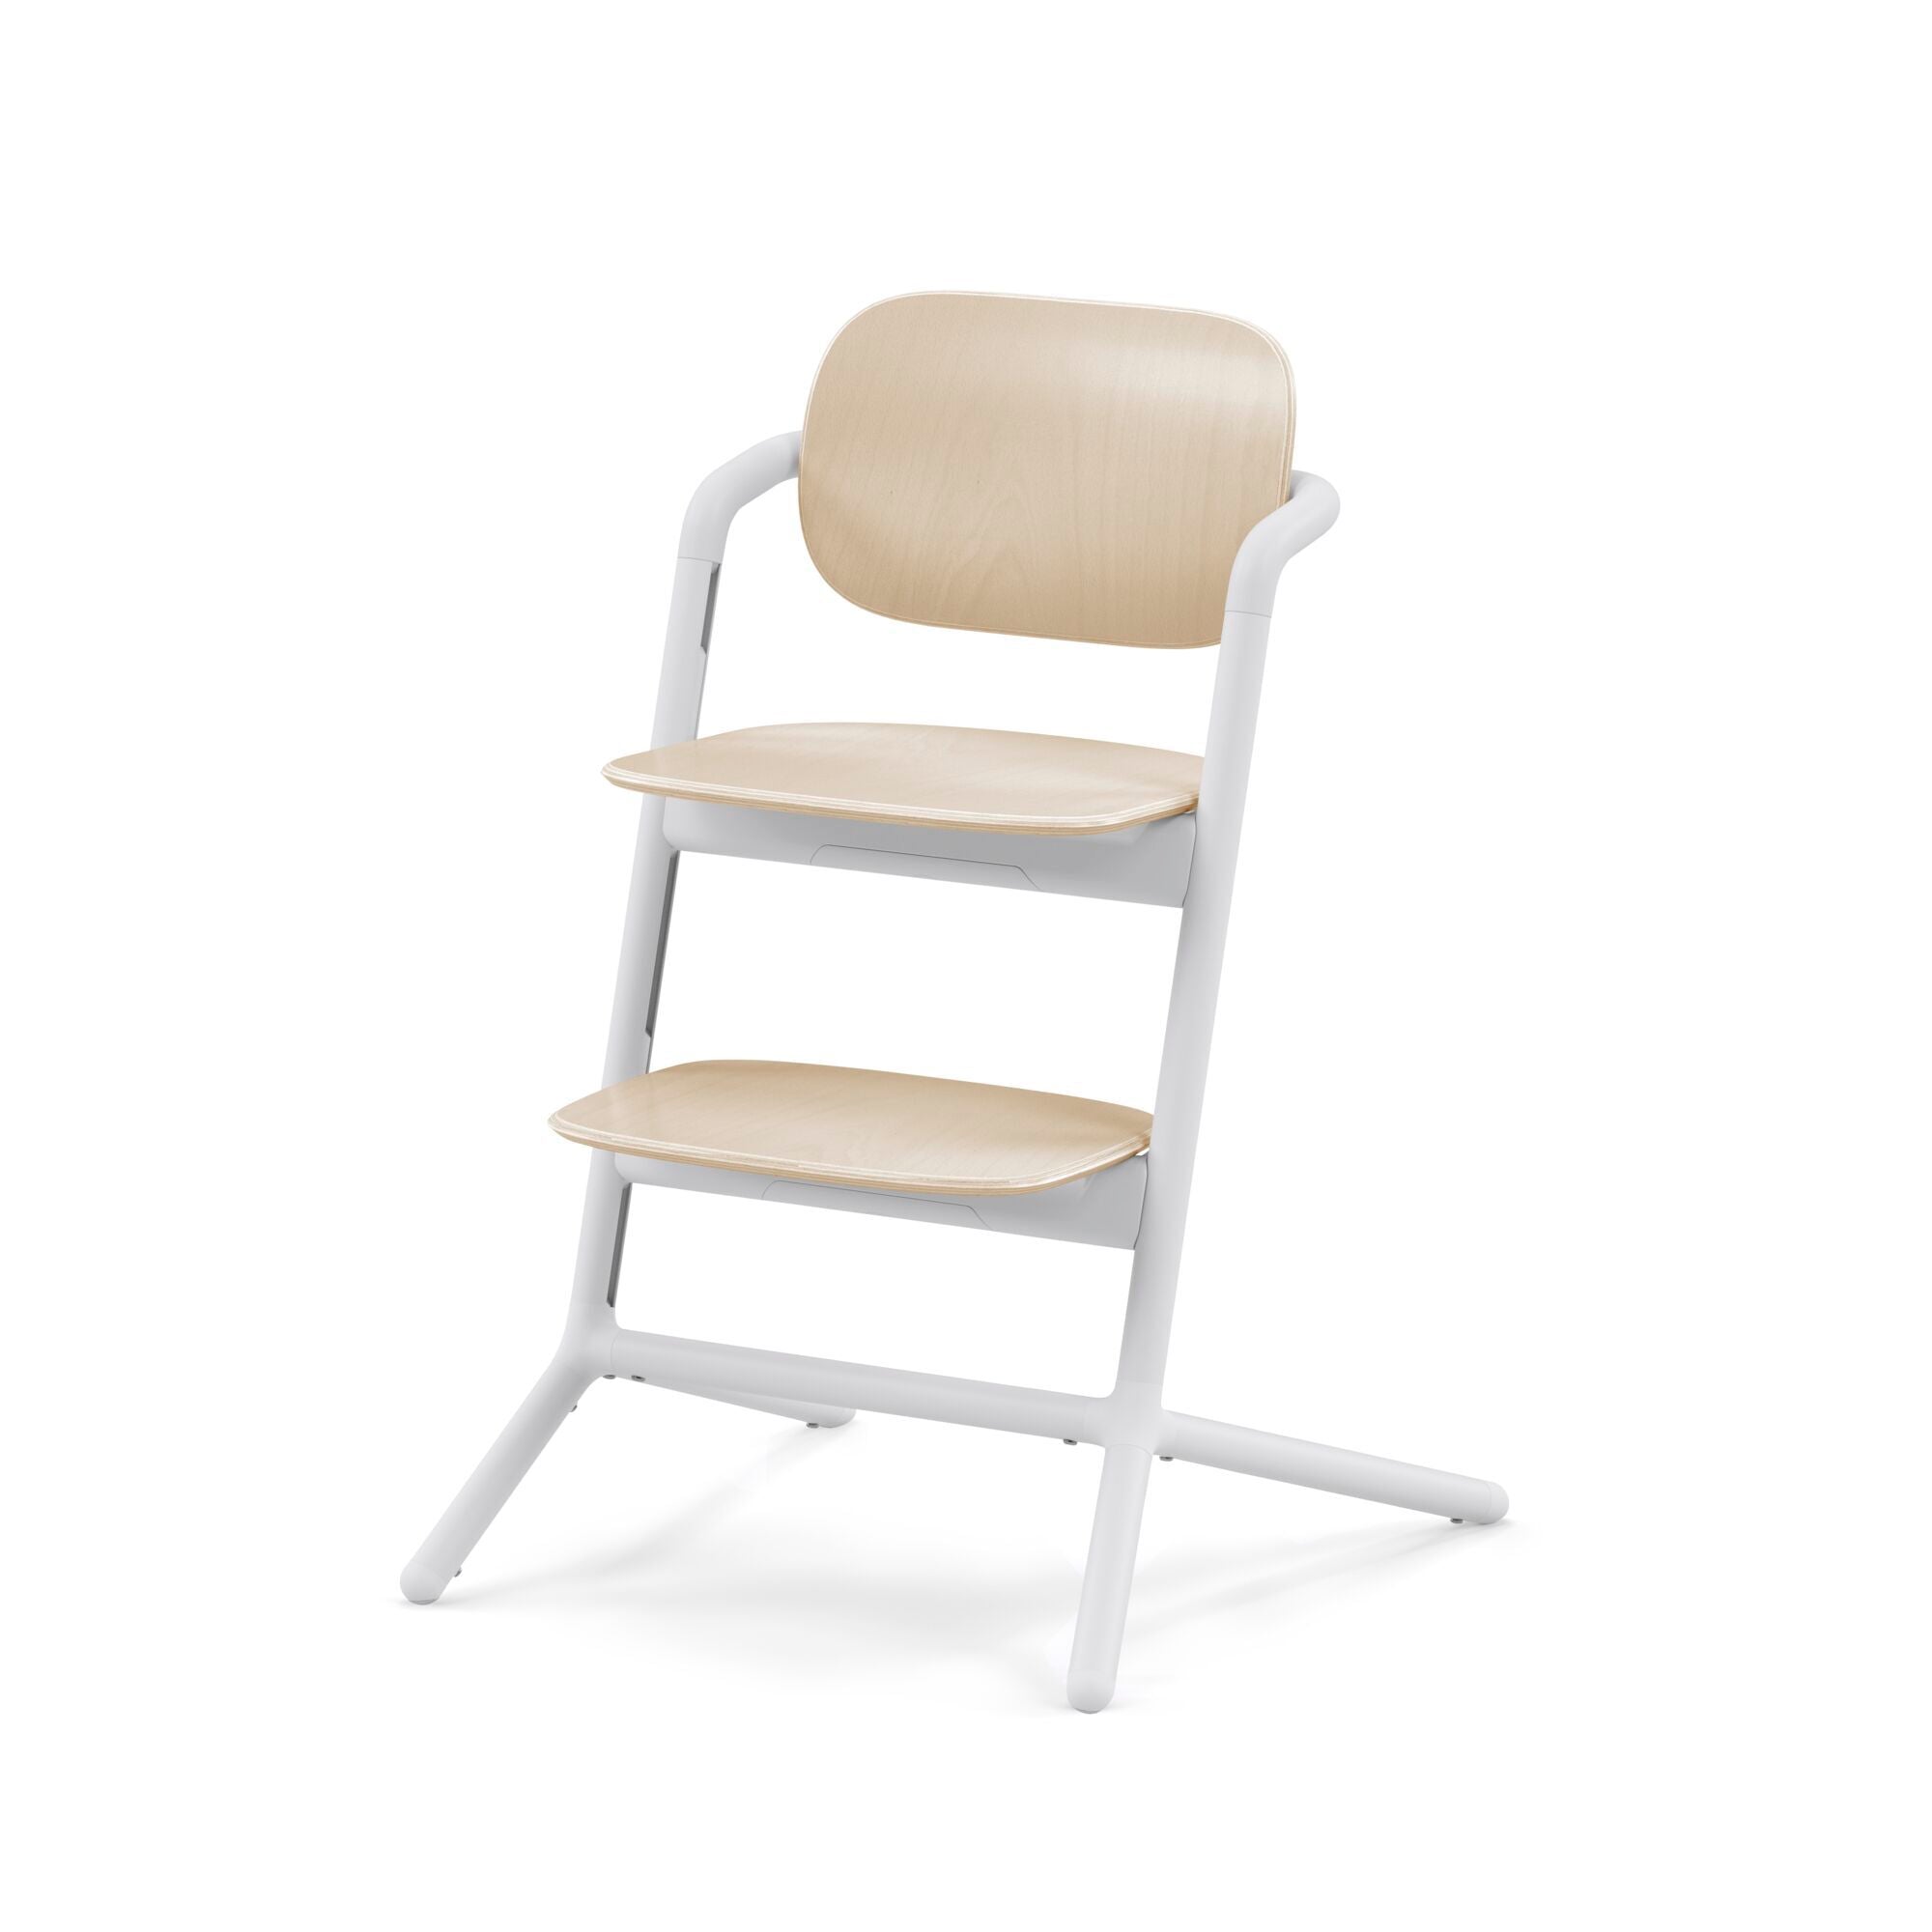 Cybex Lemo 2 High Chair 3-in-1 - ANB Baby -4063846197644$100 - $300